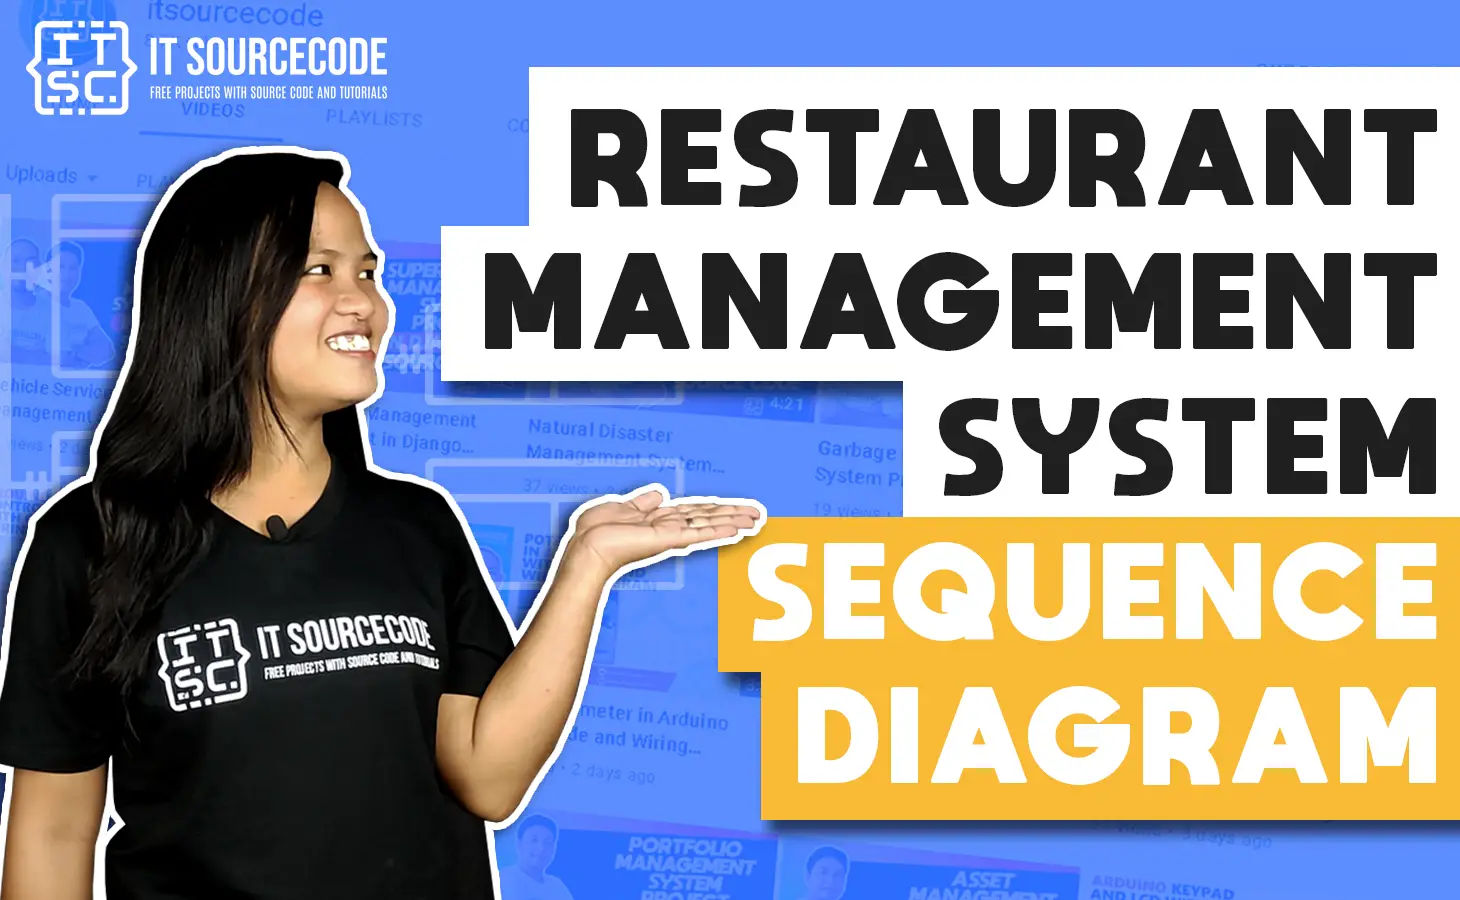 Sequence Diagram for Restaurant Management System